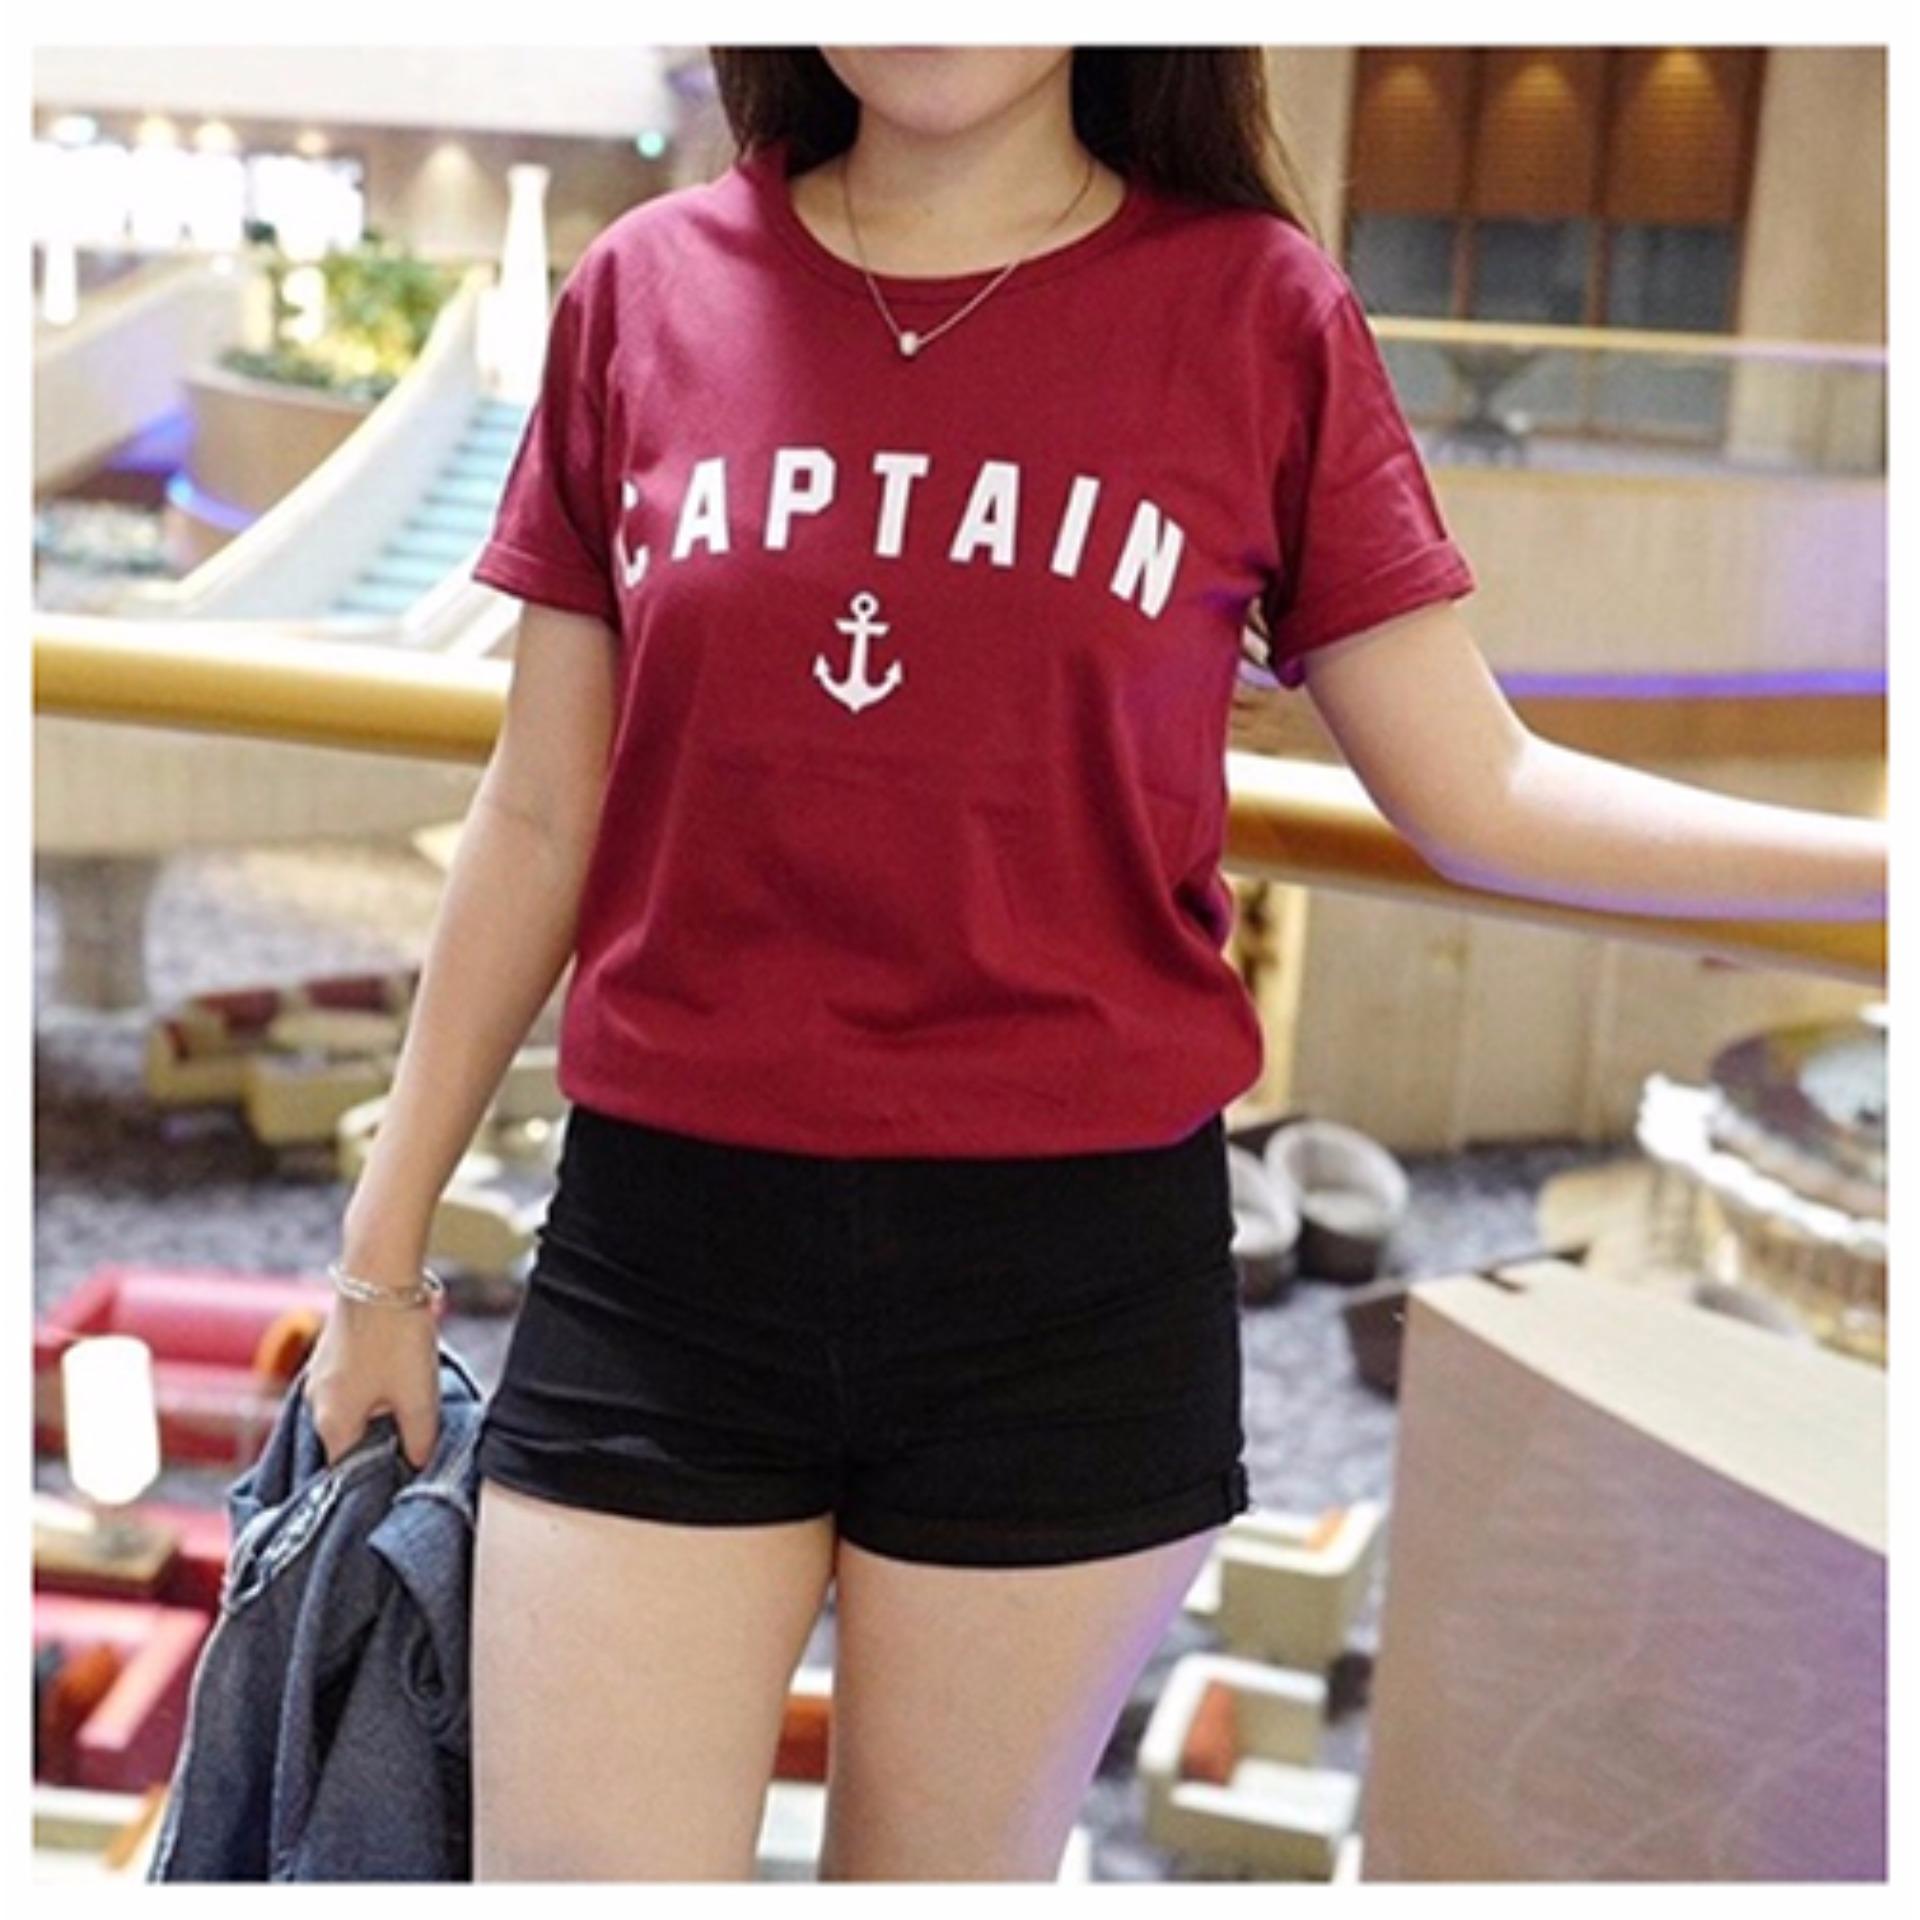 KaosBro - Kaos Cewek / T-Shirt Wanita / Tumblr Tee Captain - Merah Marun